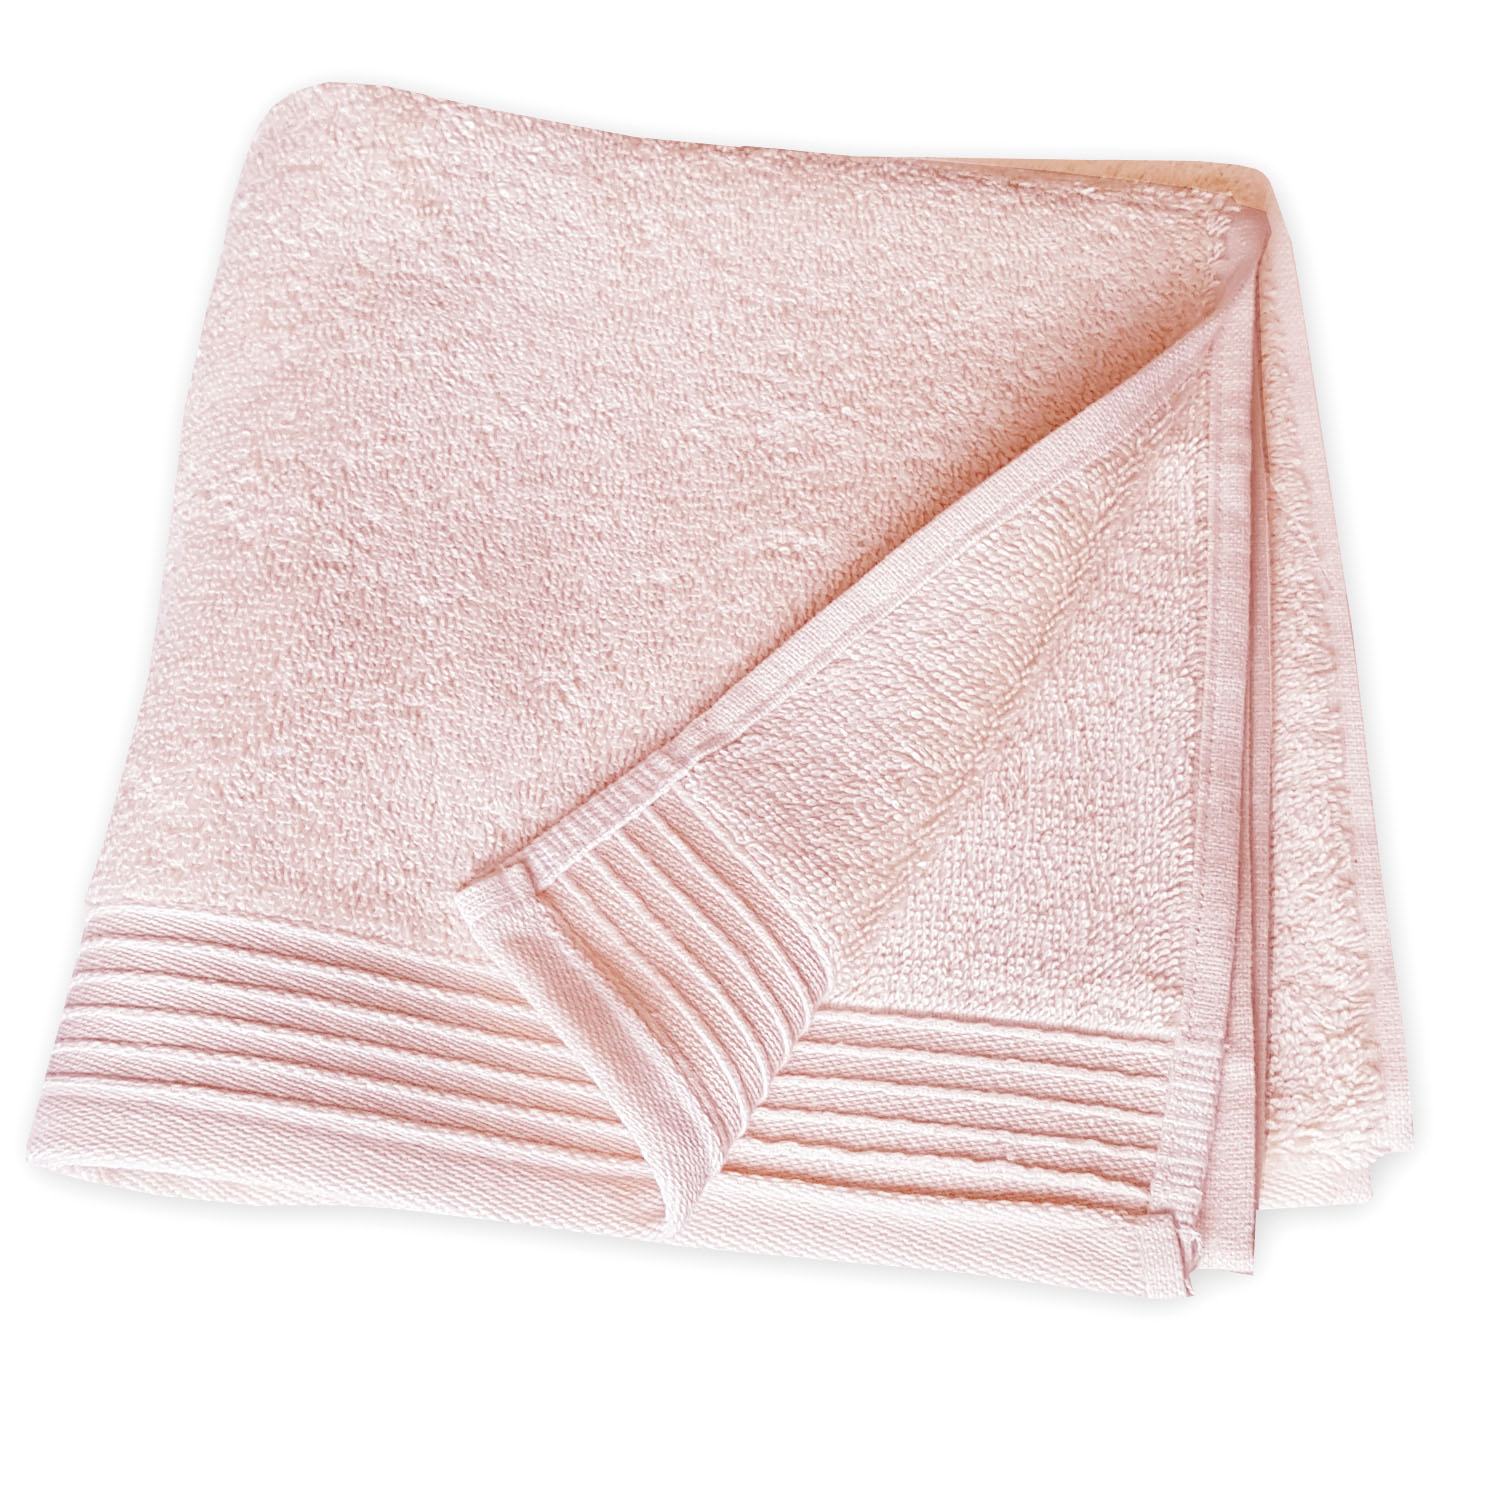 Premium Rose Quartz- Flauschige Handtücher und Badetücher mit edlem Glanz-  Framsohn